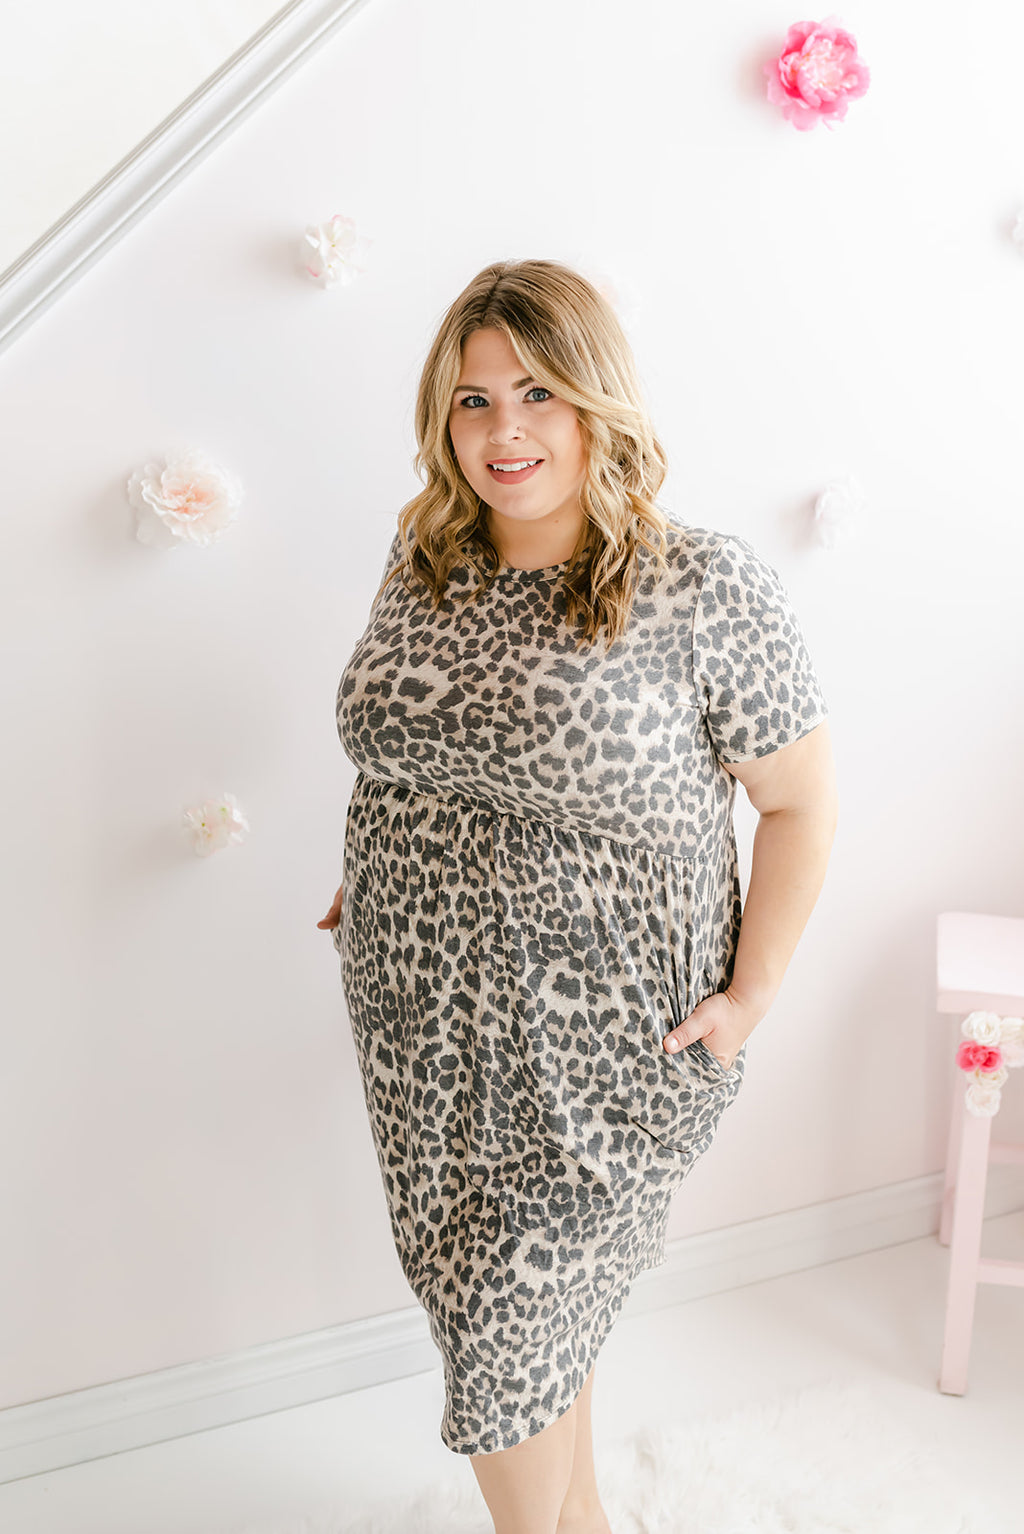 Curvy Cheetah Babydoll Dress - MNR Beauty Boutique